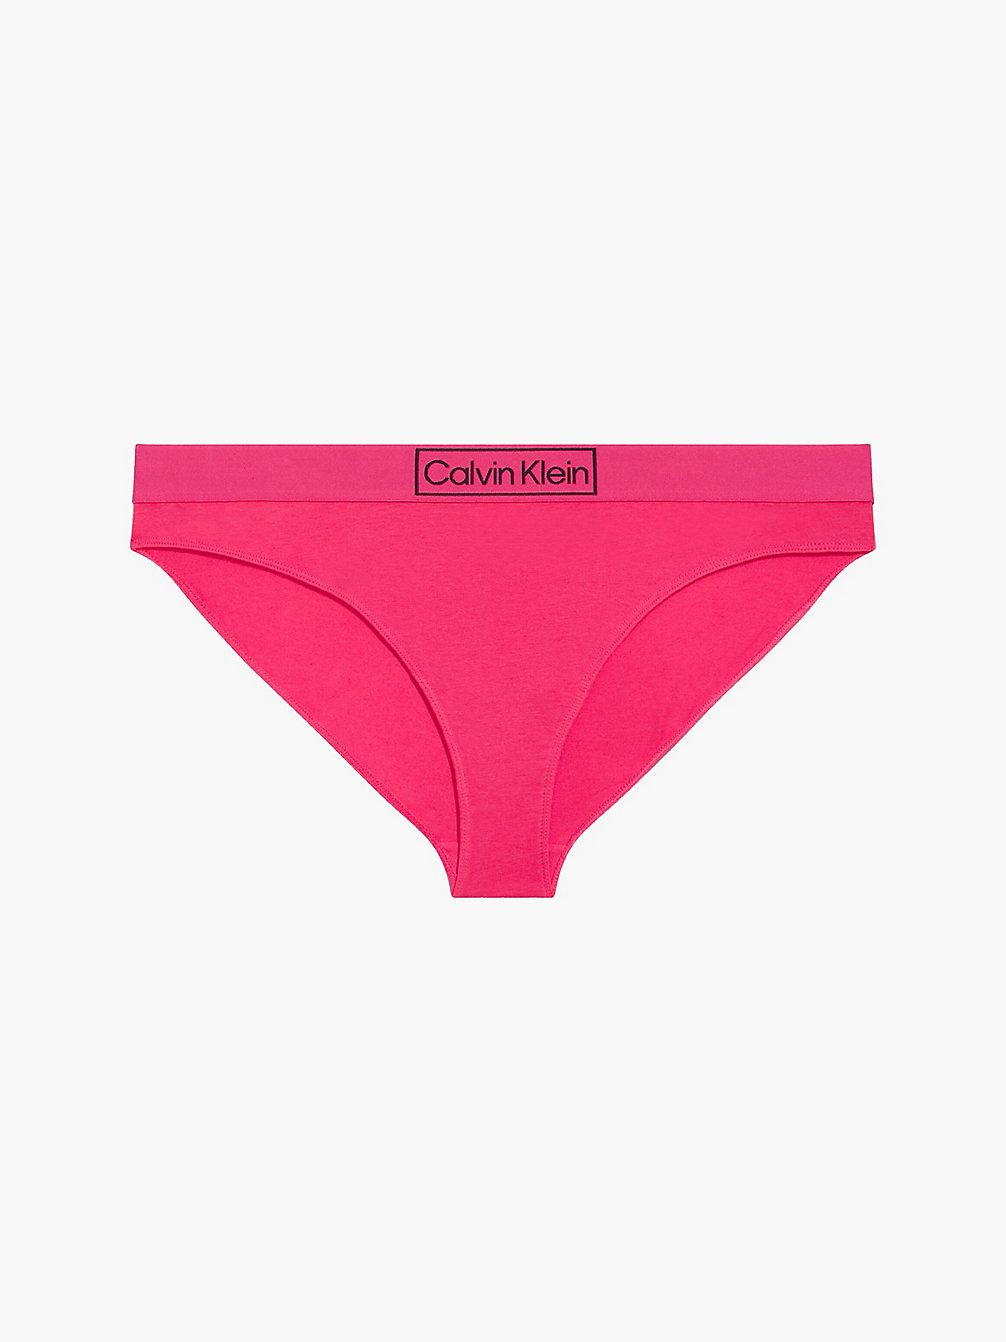 PINK SPLENDOR Plus Size Bikini Briefs - Reimagined Heritage undefined women Calvin Klein